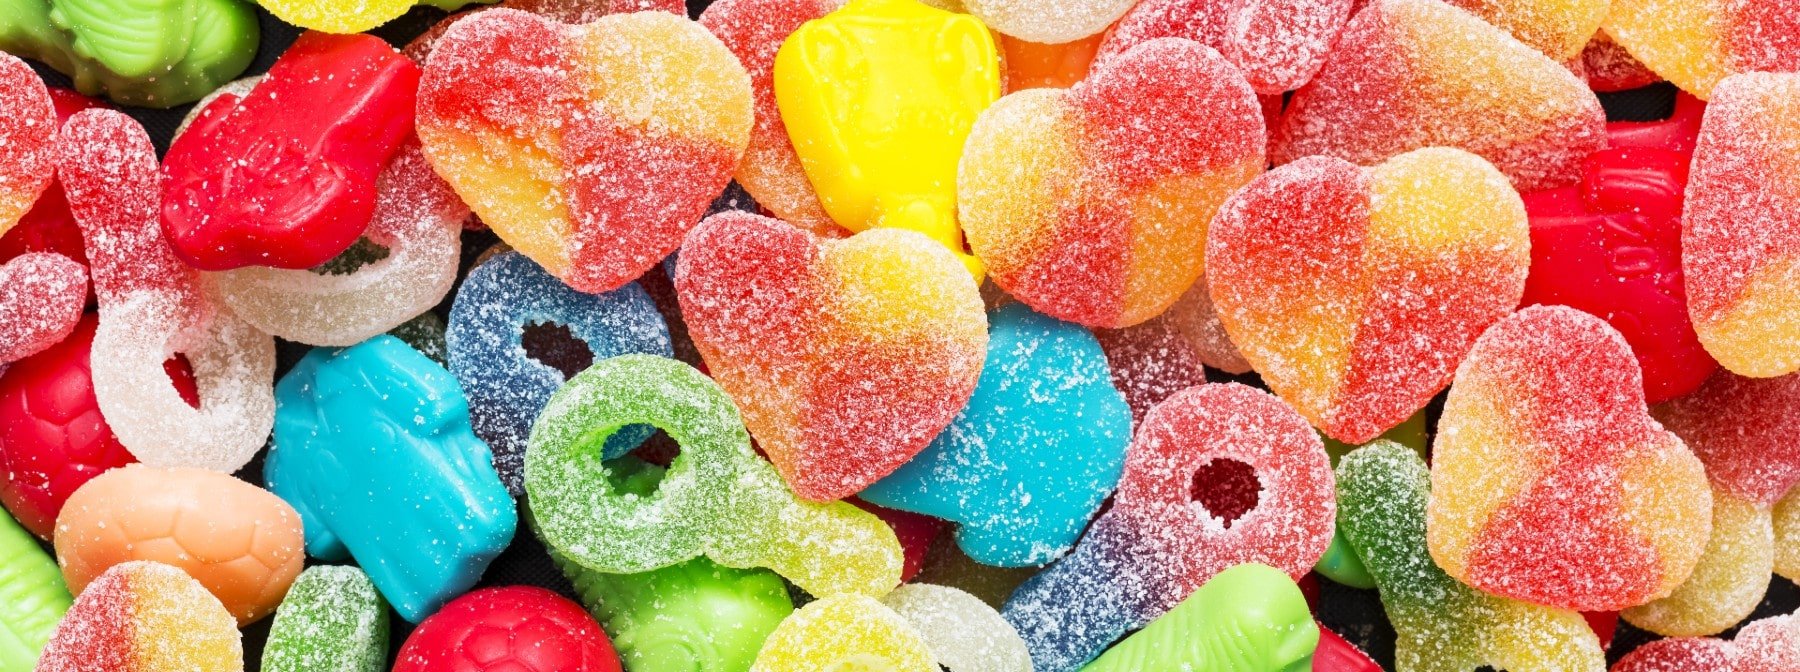 Nutritionist Reviews Sugar Busters Diet | ’90s Diet Trends